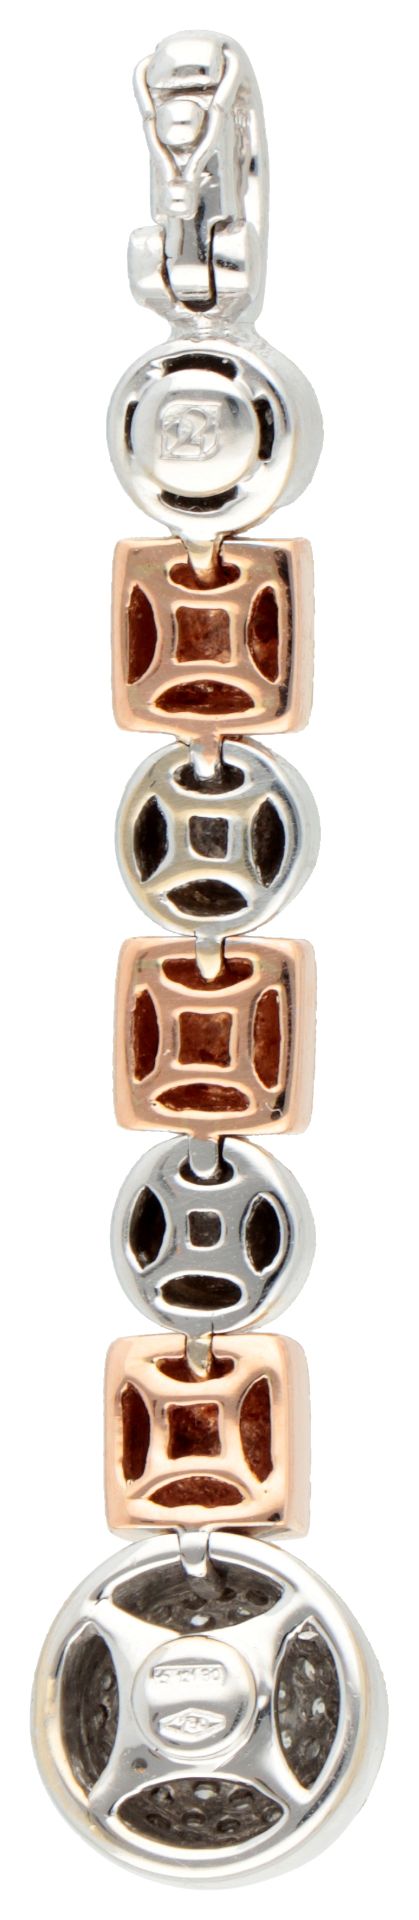 18K Bicolour gold pendant with diamonds. - Image 2 of 4